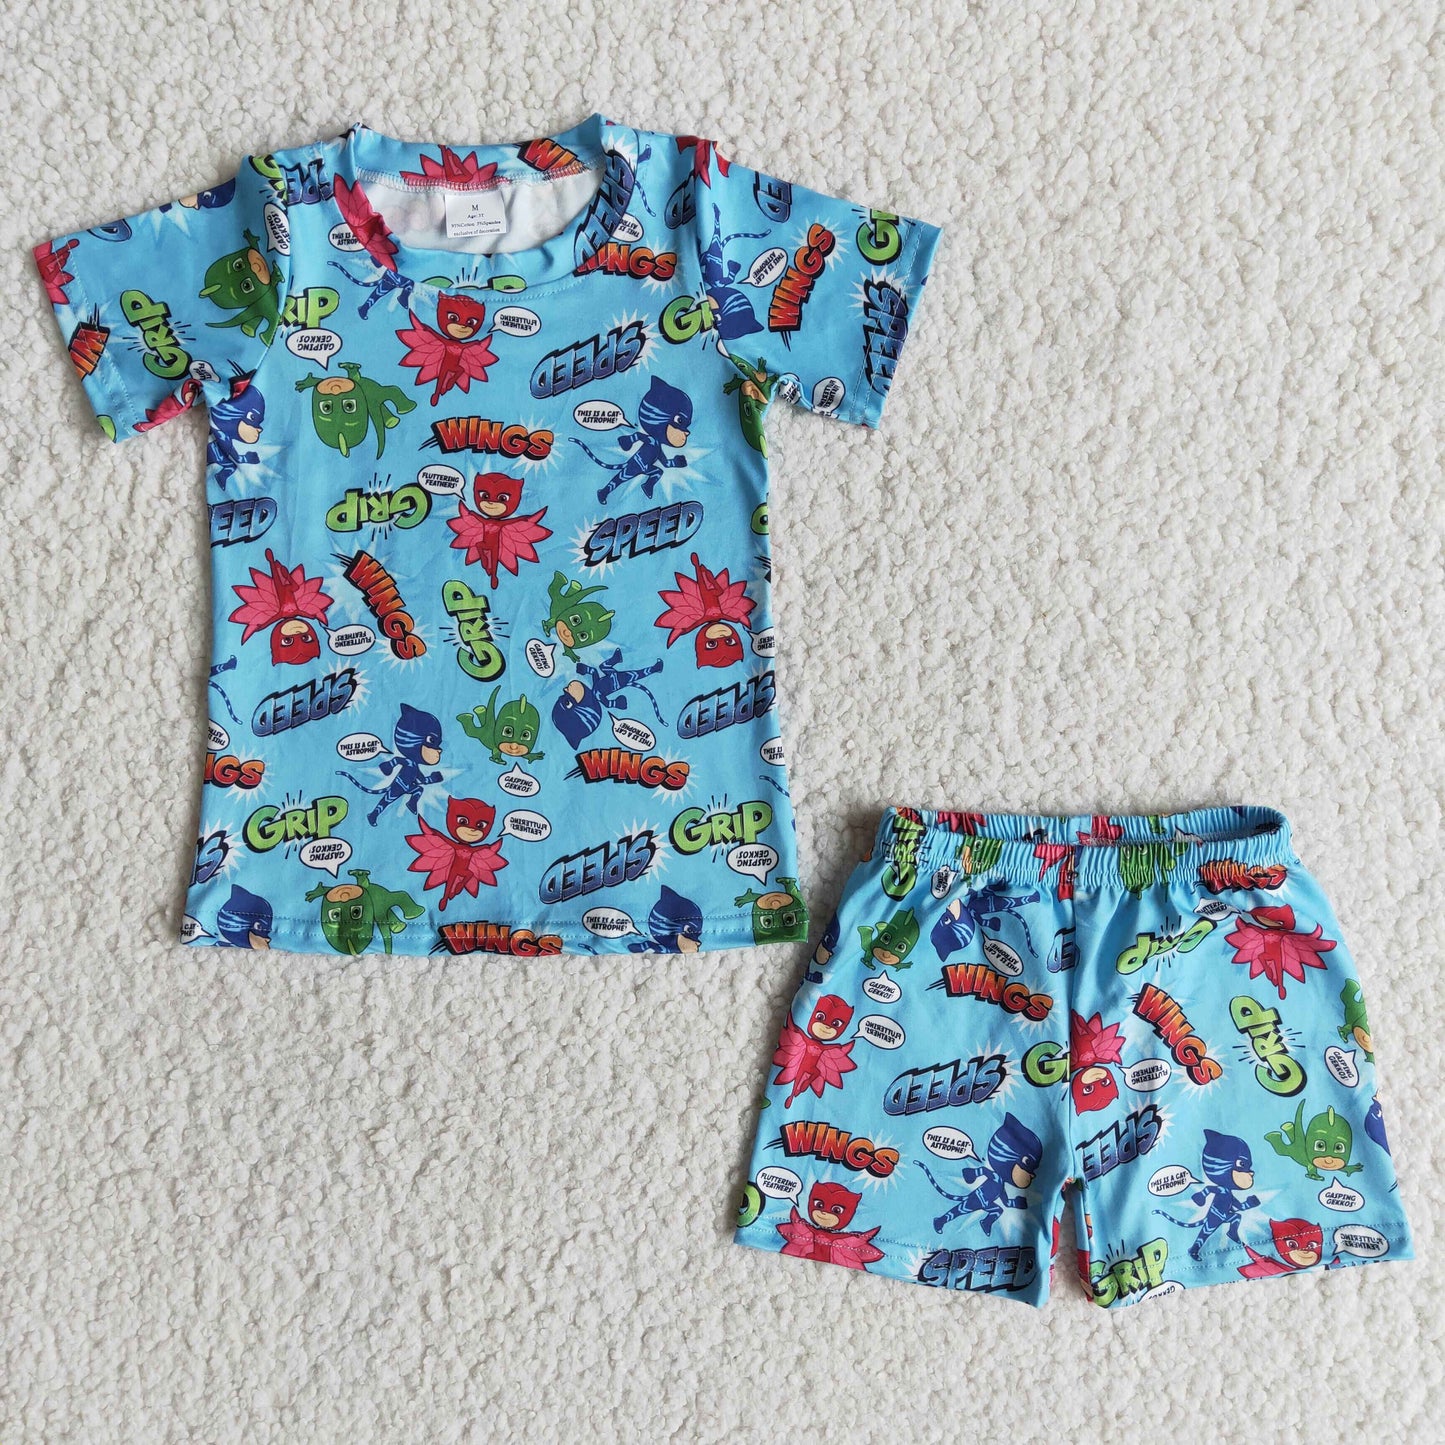 Speed wings short sleeve shorts hero boy summer pajamas